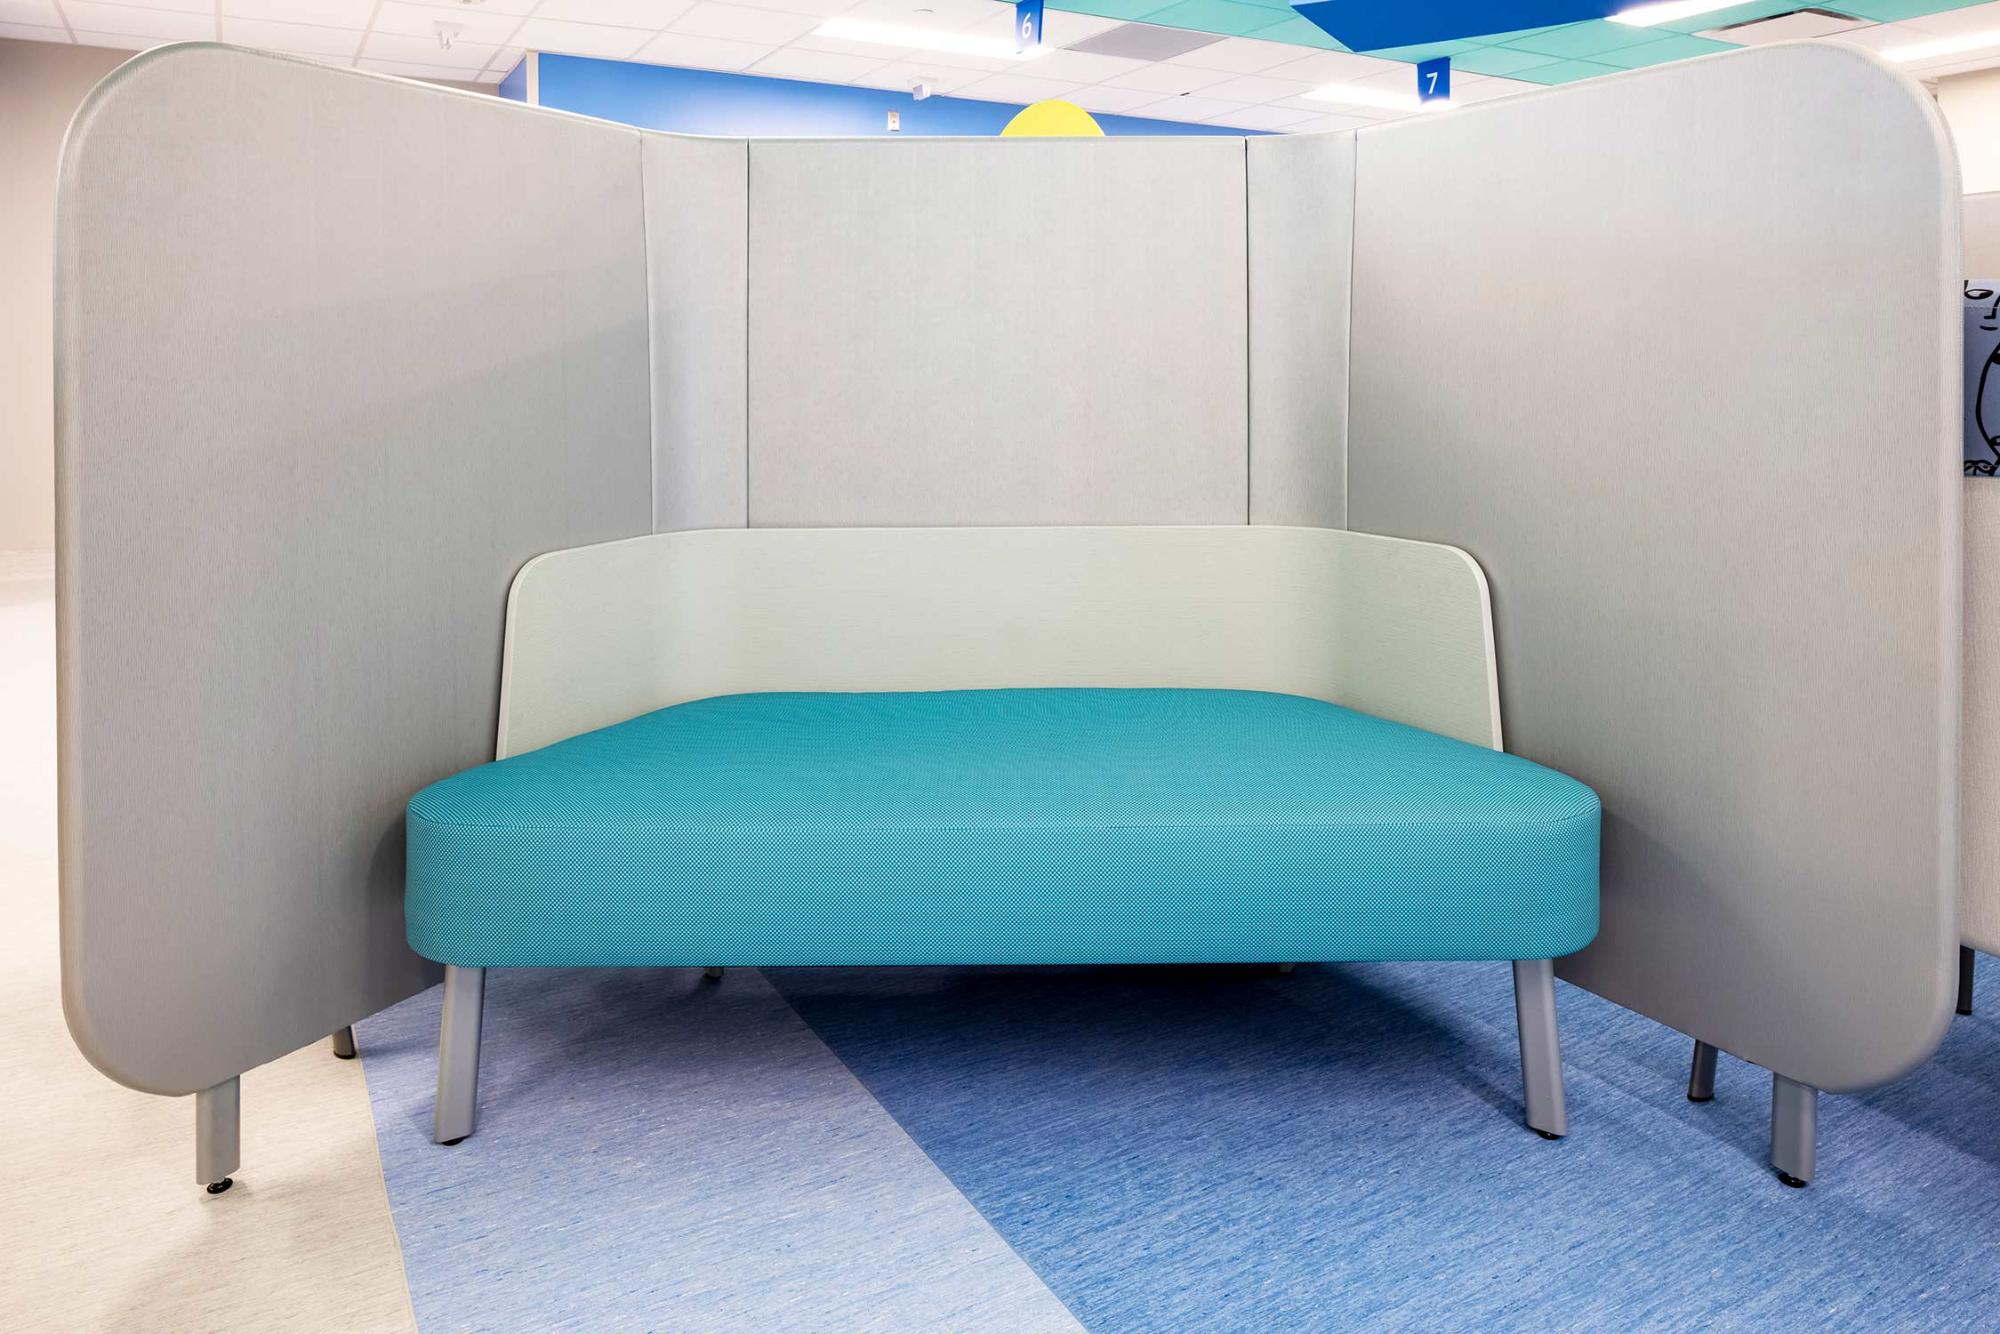 DARRAN Furniture - Dell Pediatrics